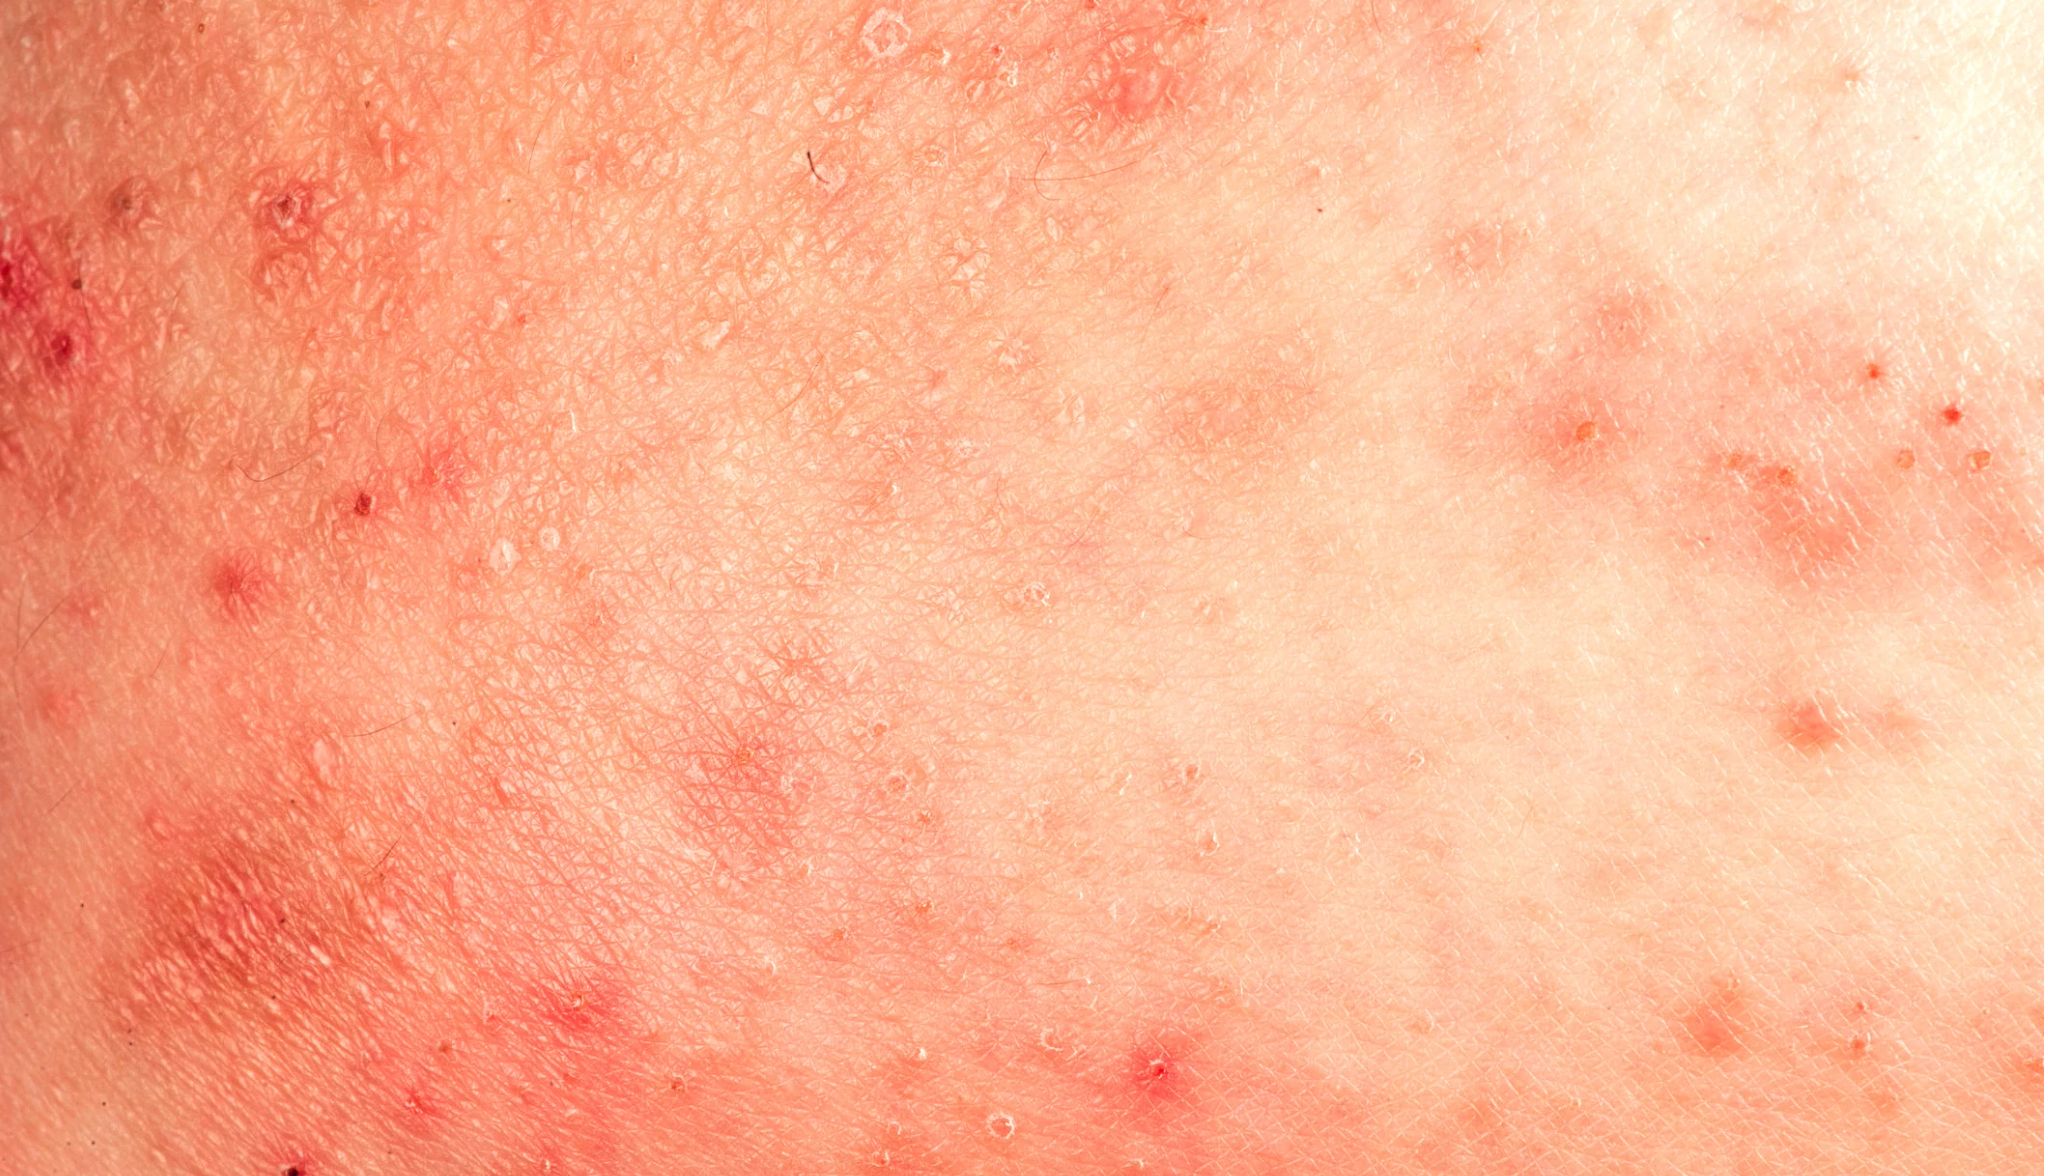 Asteatotic eczema 